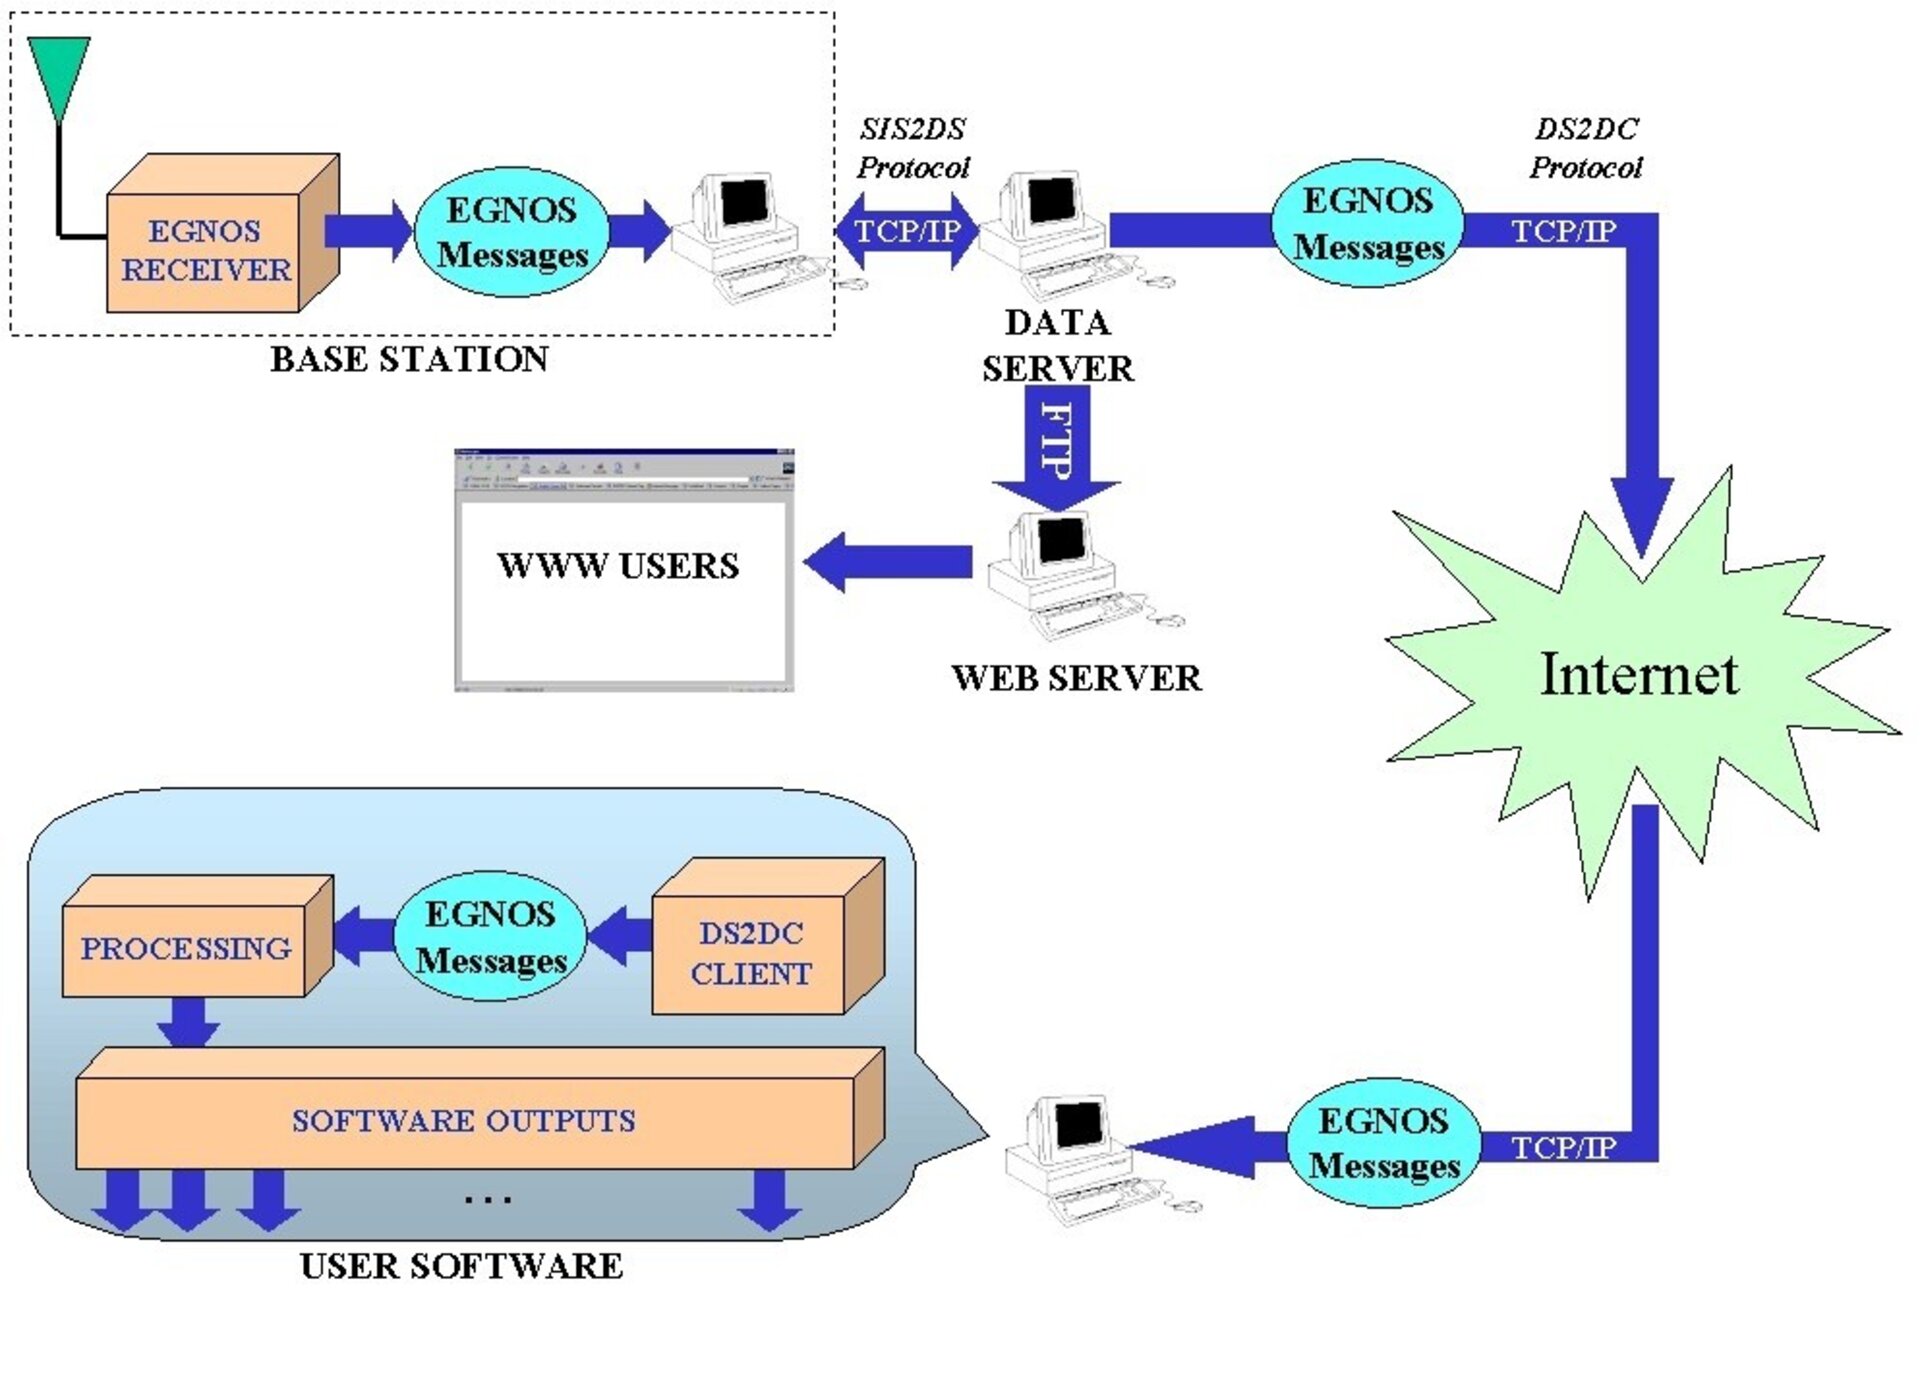 Architecture of the ESA SISNeT platform